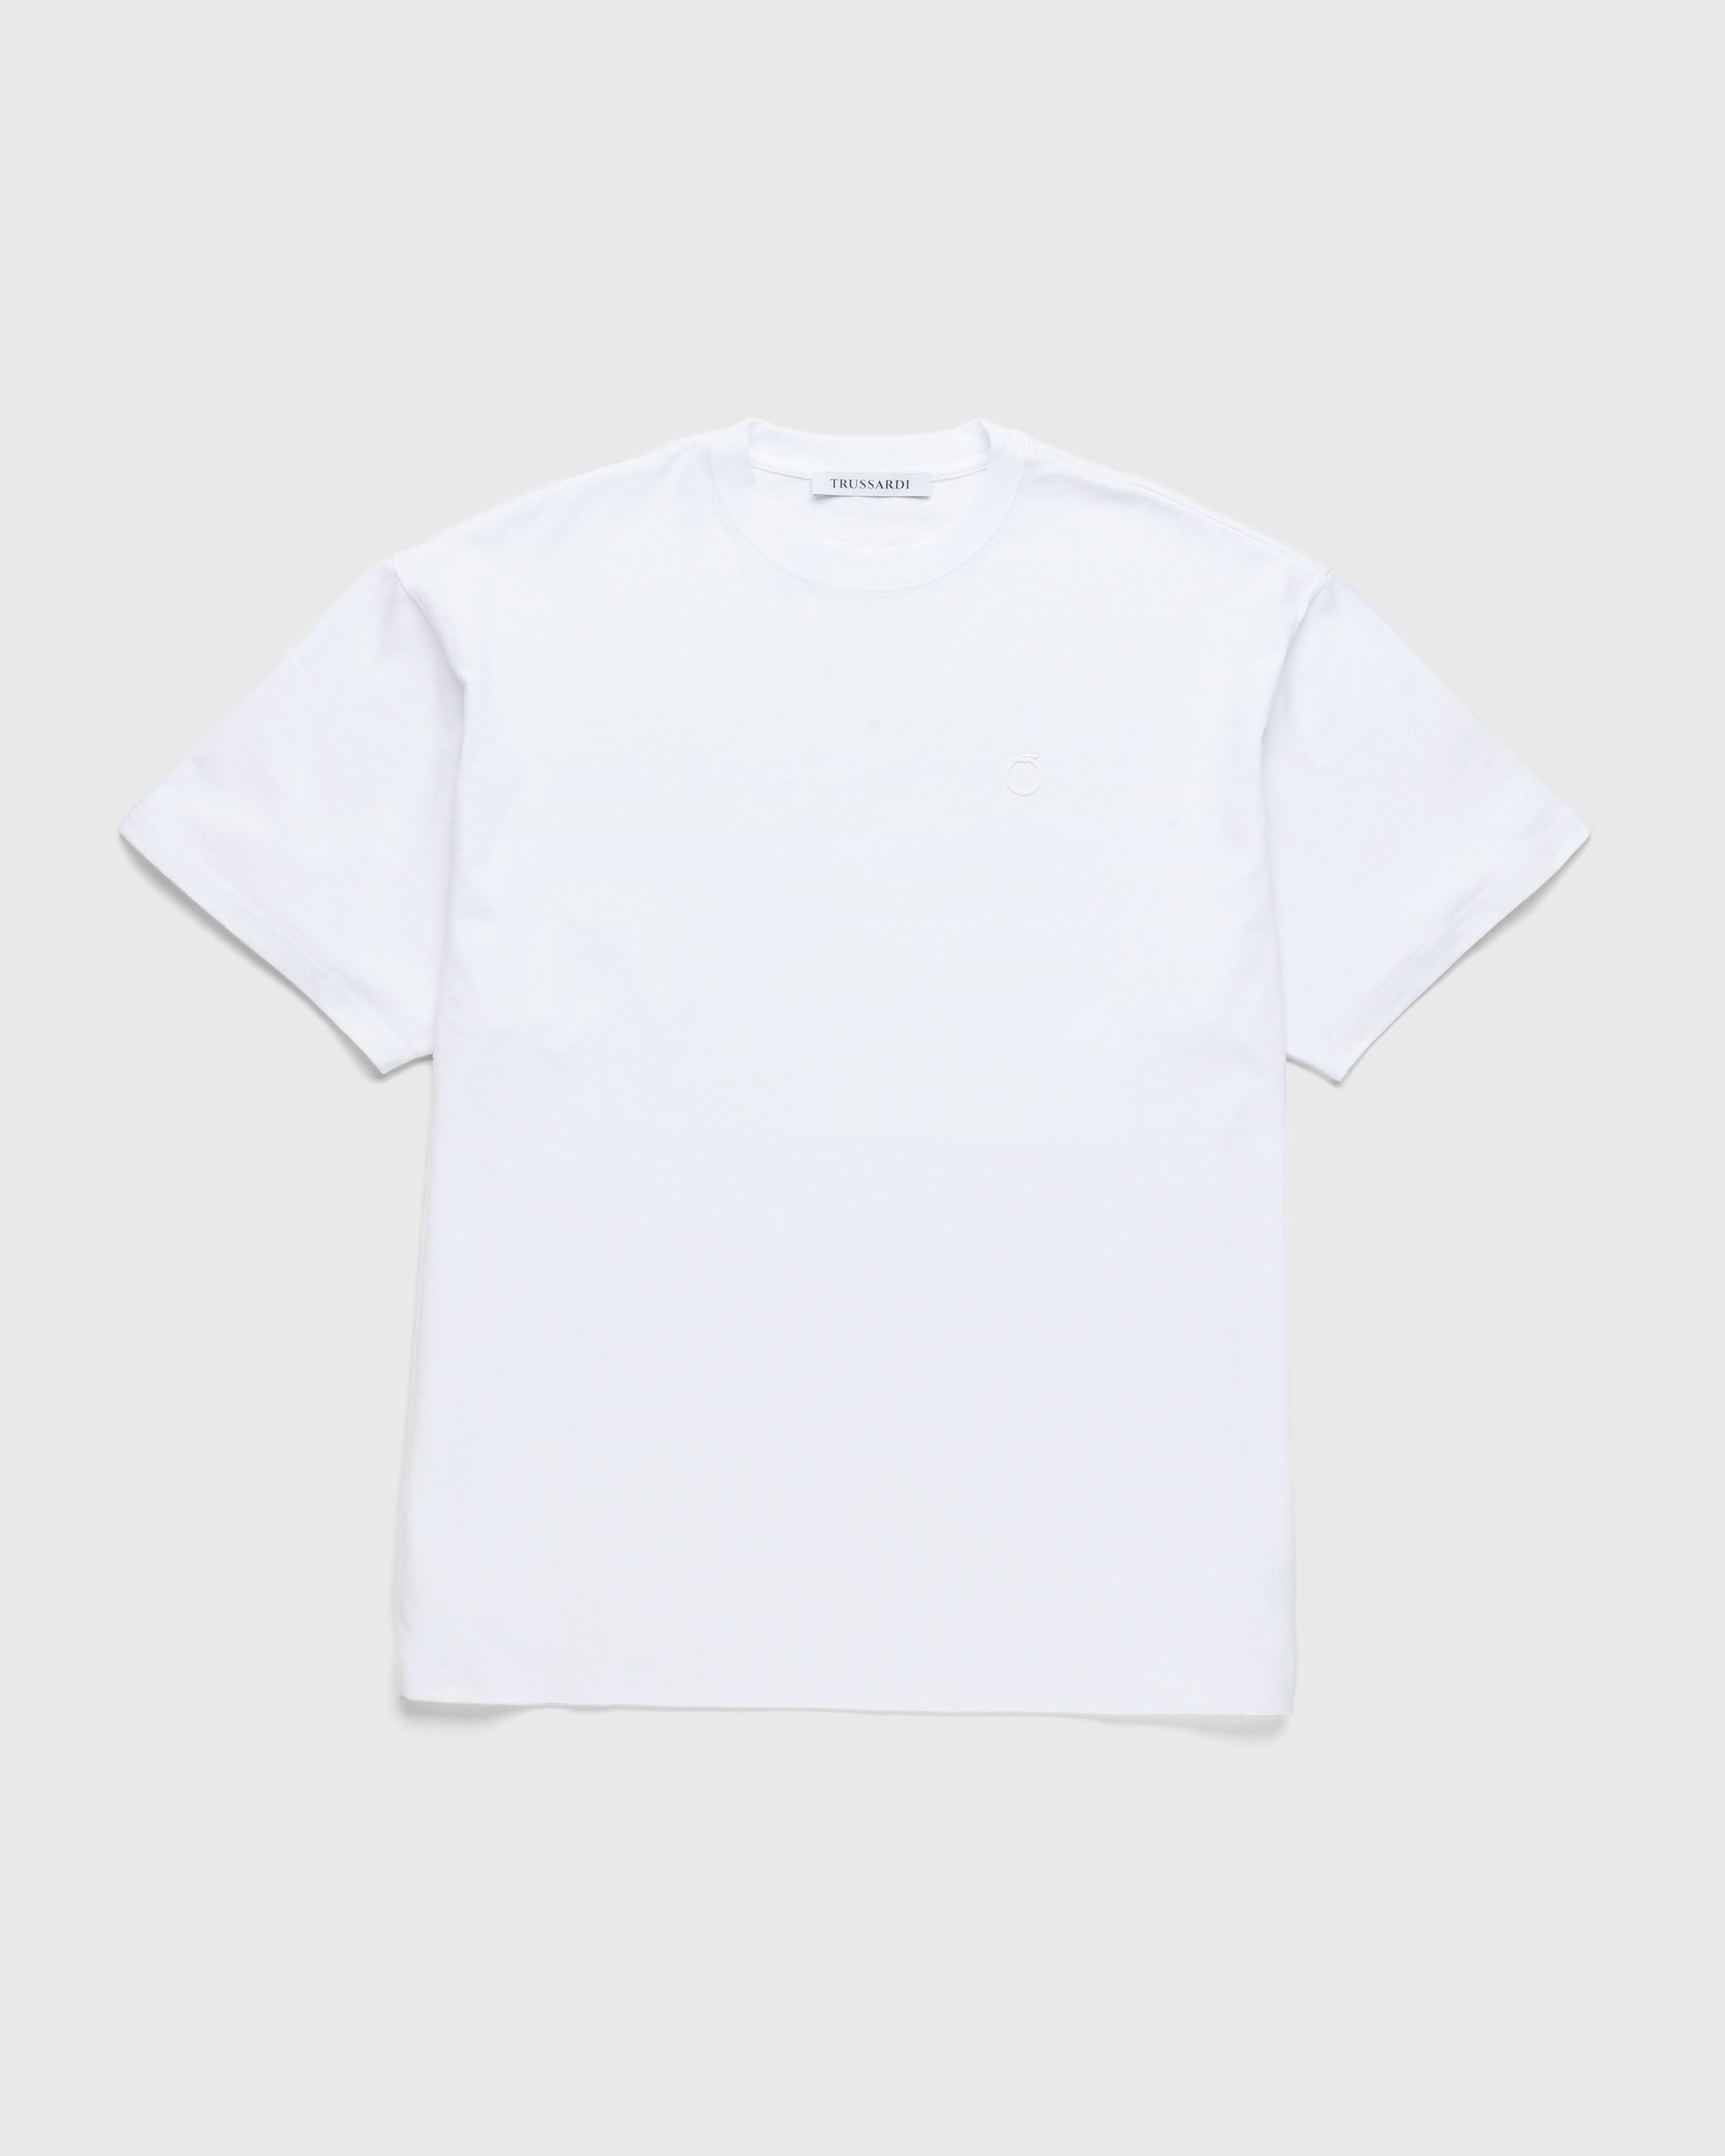 Trussardi – Greyhound T-Shirt White - T-Shirts - White - Image 1